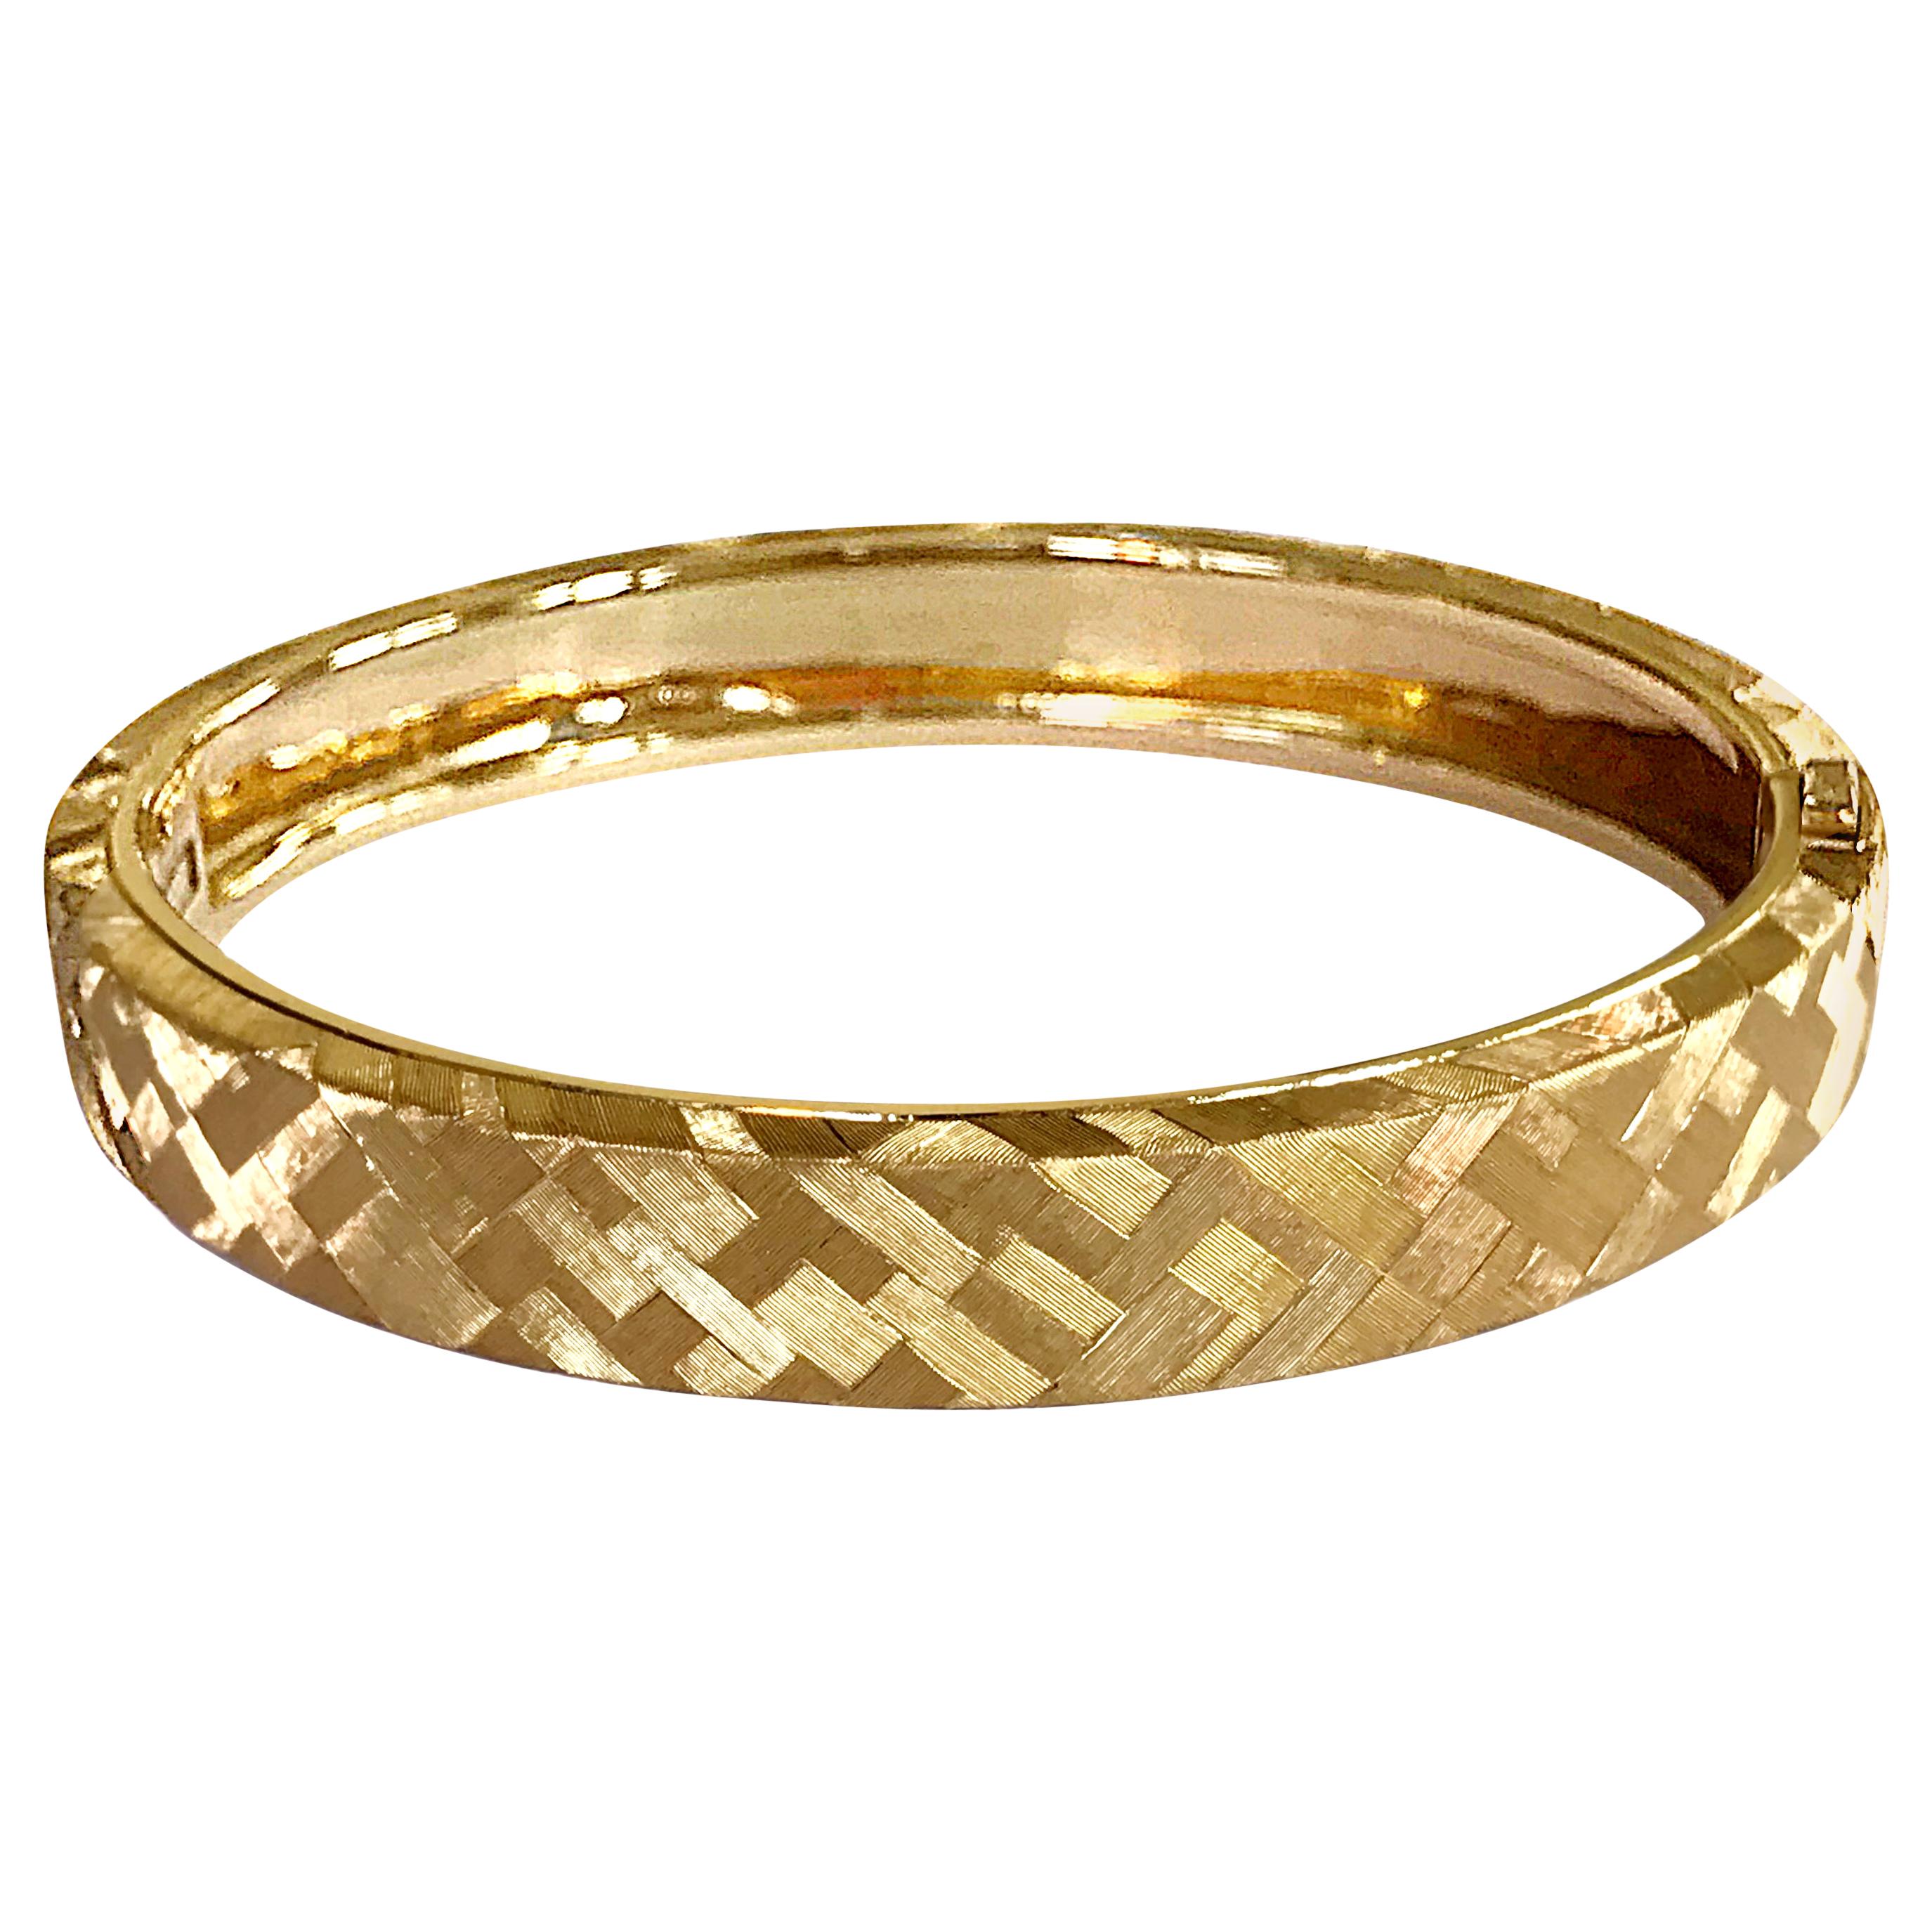 Dalben Hand Engraved Gold Bracelet